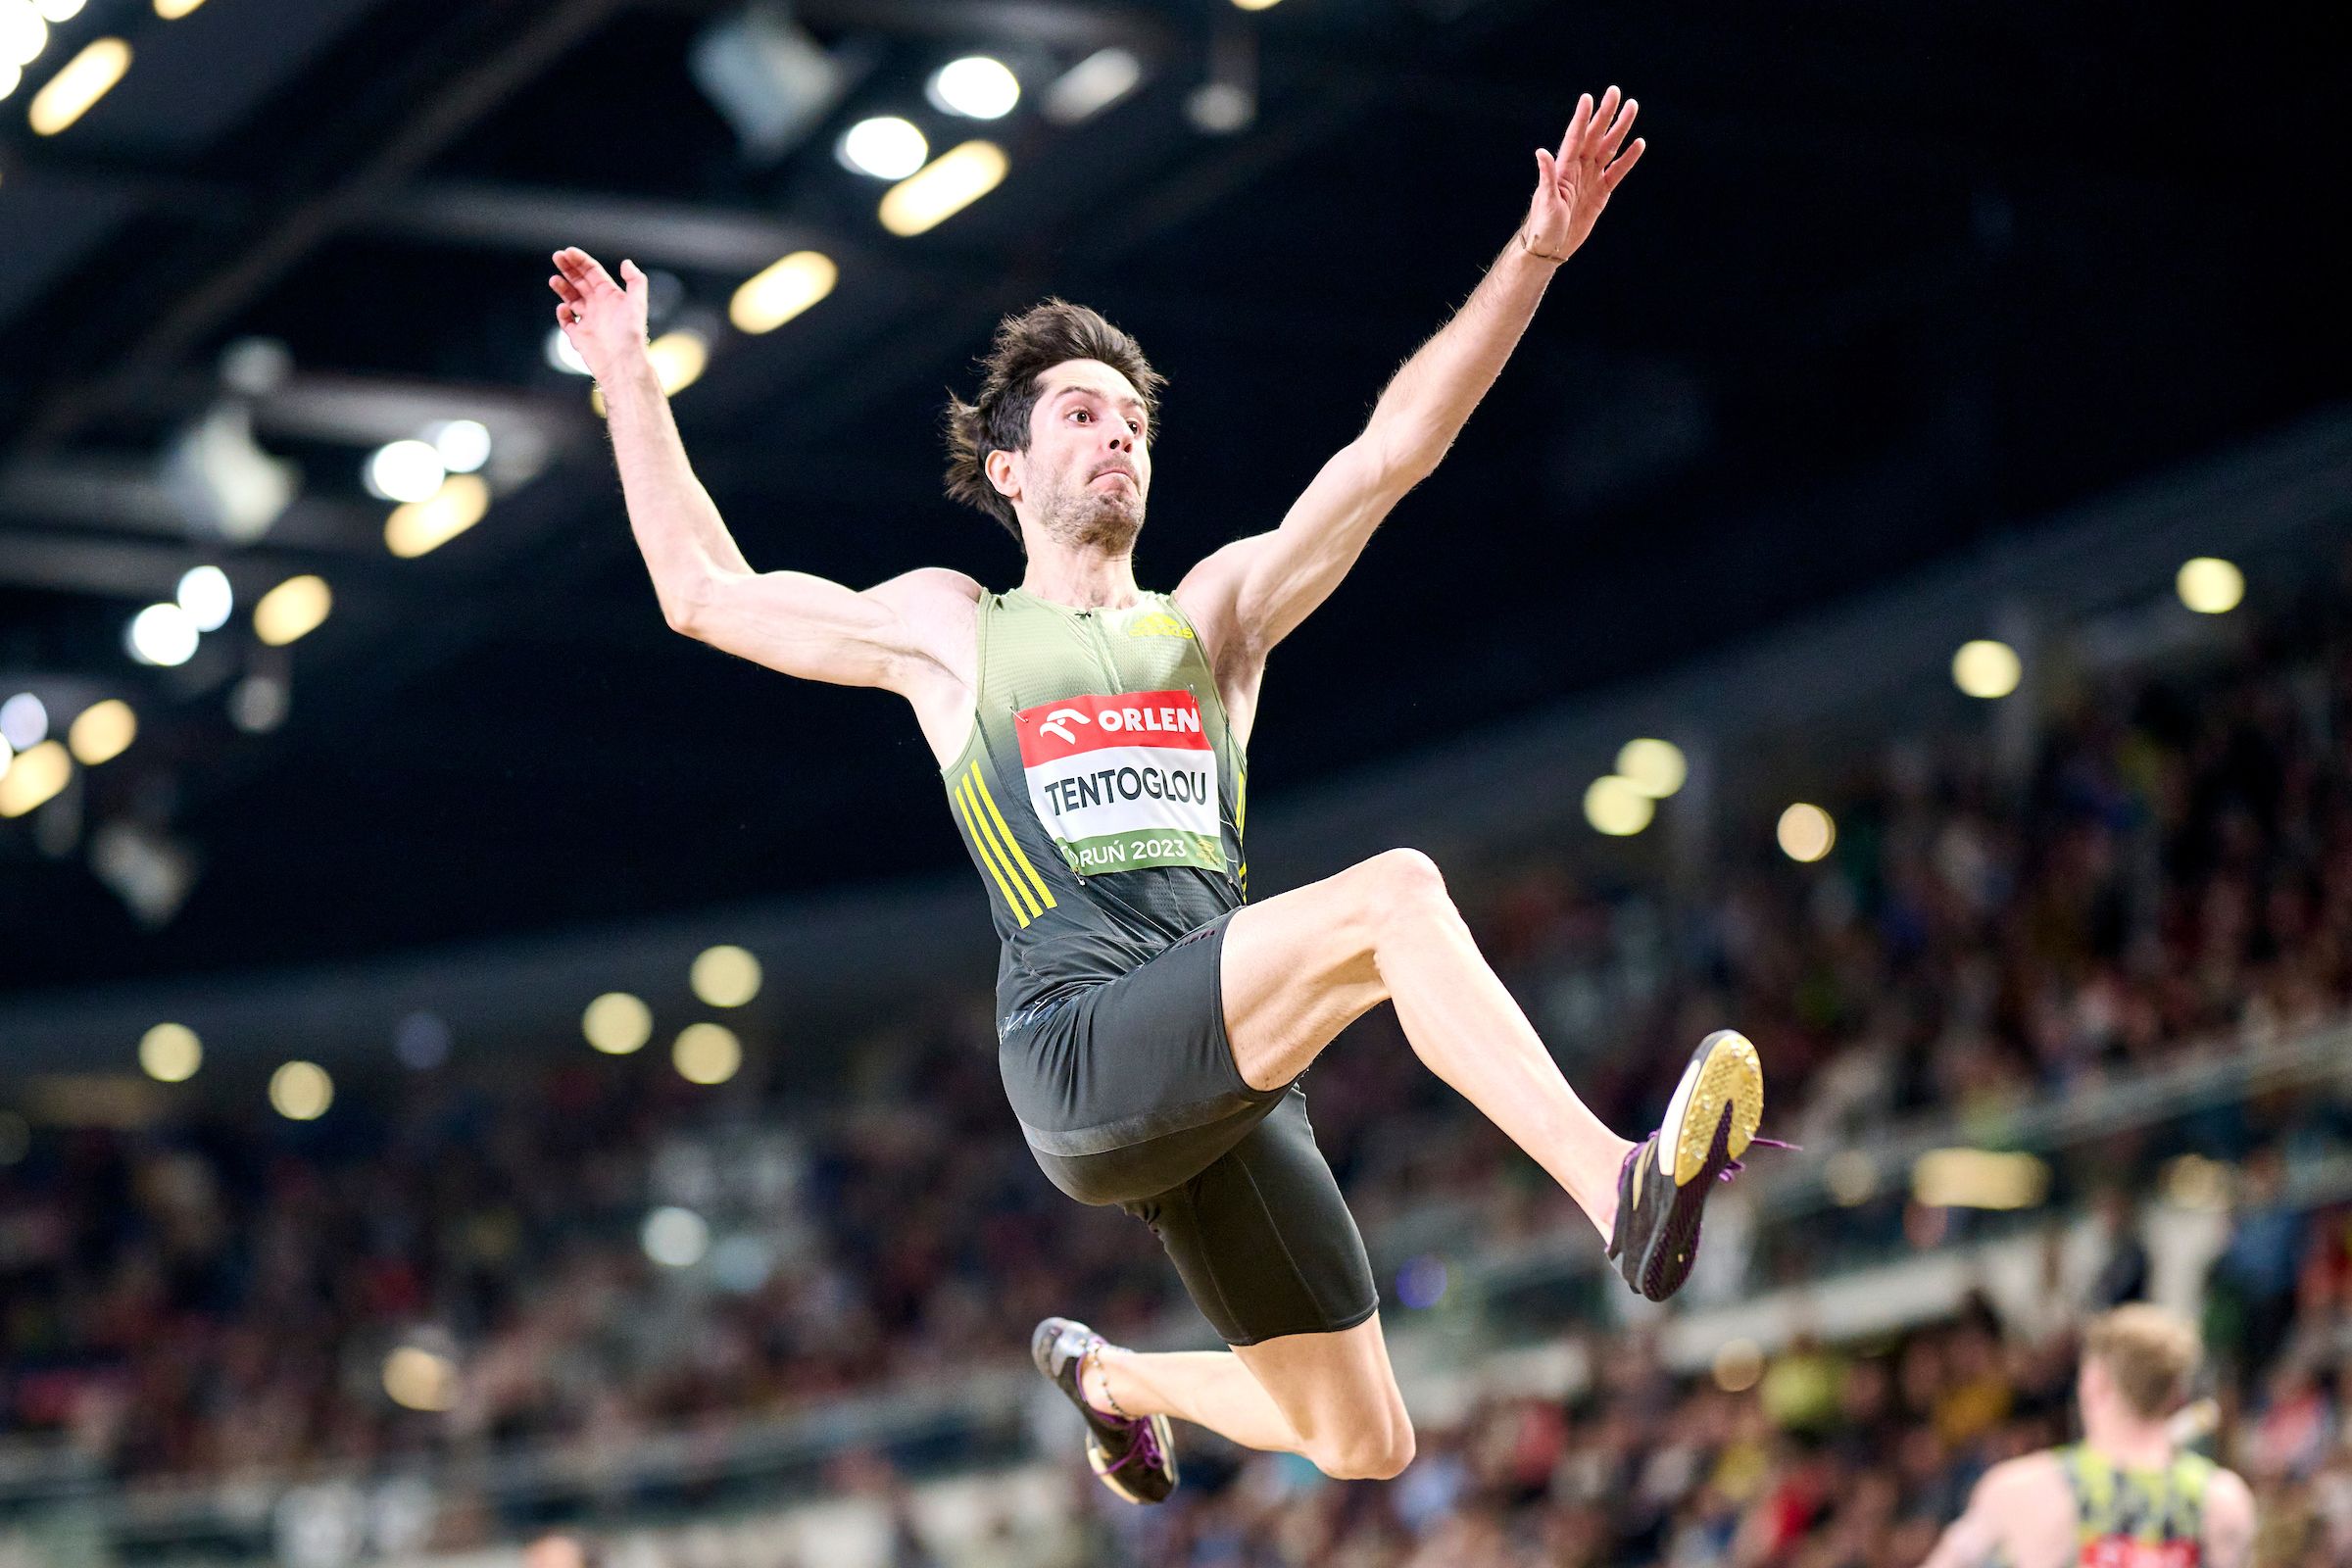 Long jump winner Miltiadis Tentoglou soars at the World Indoor Tour Gold meeting in Torun